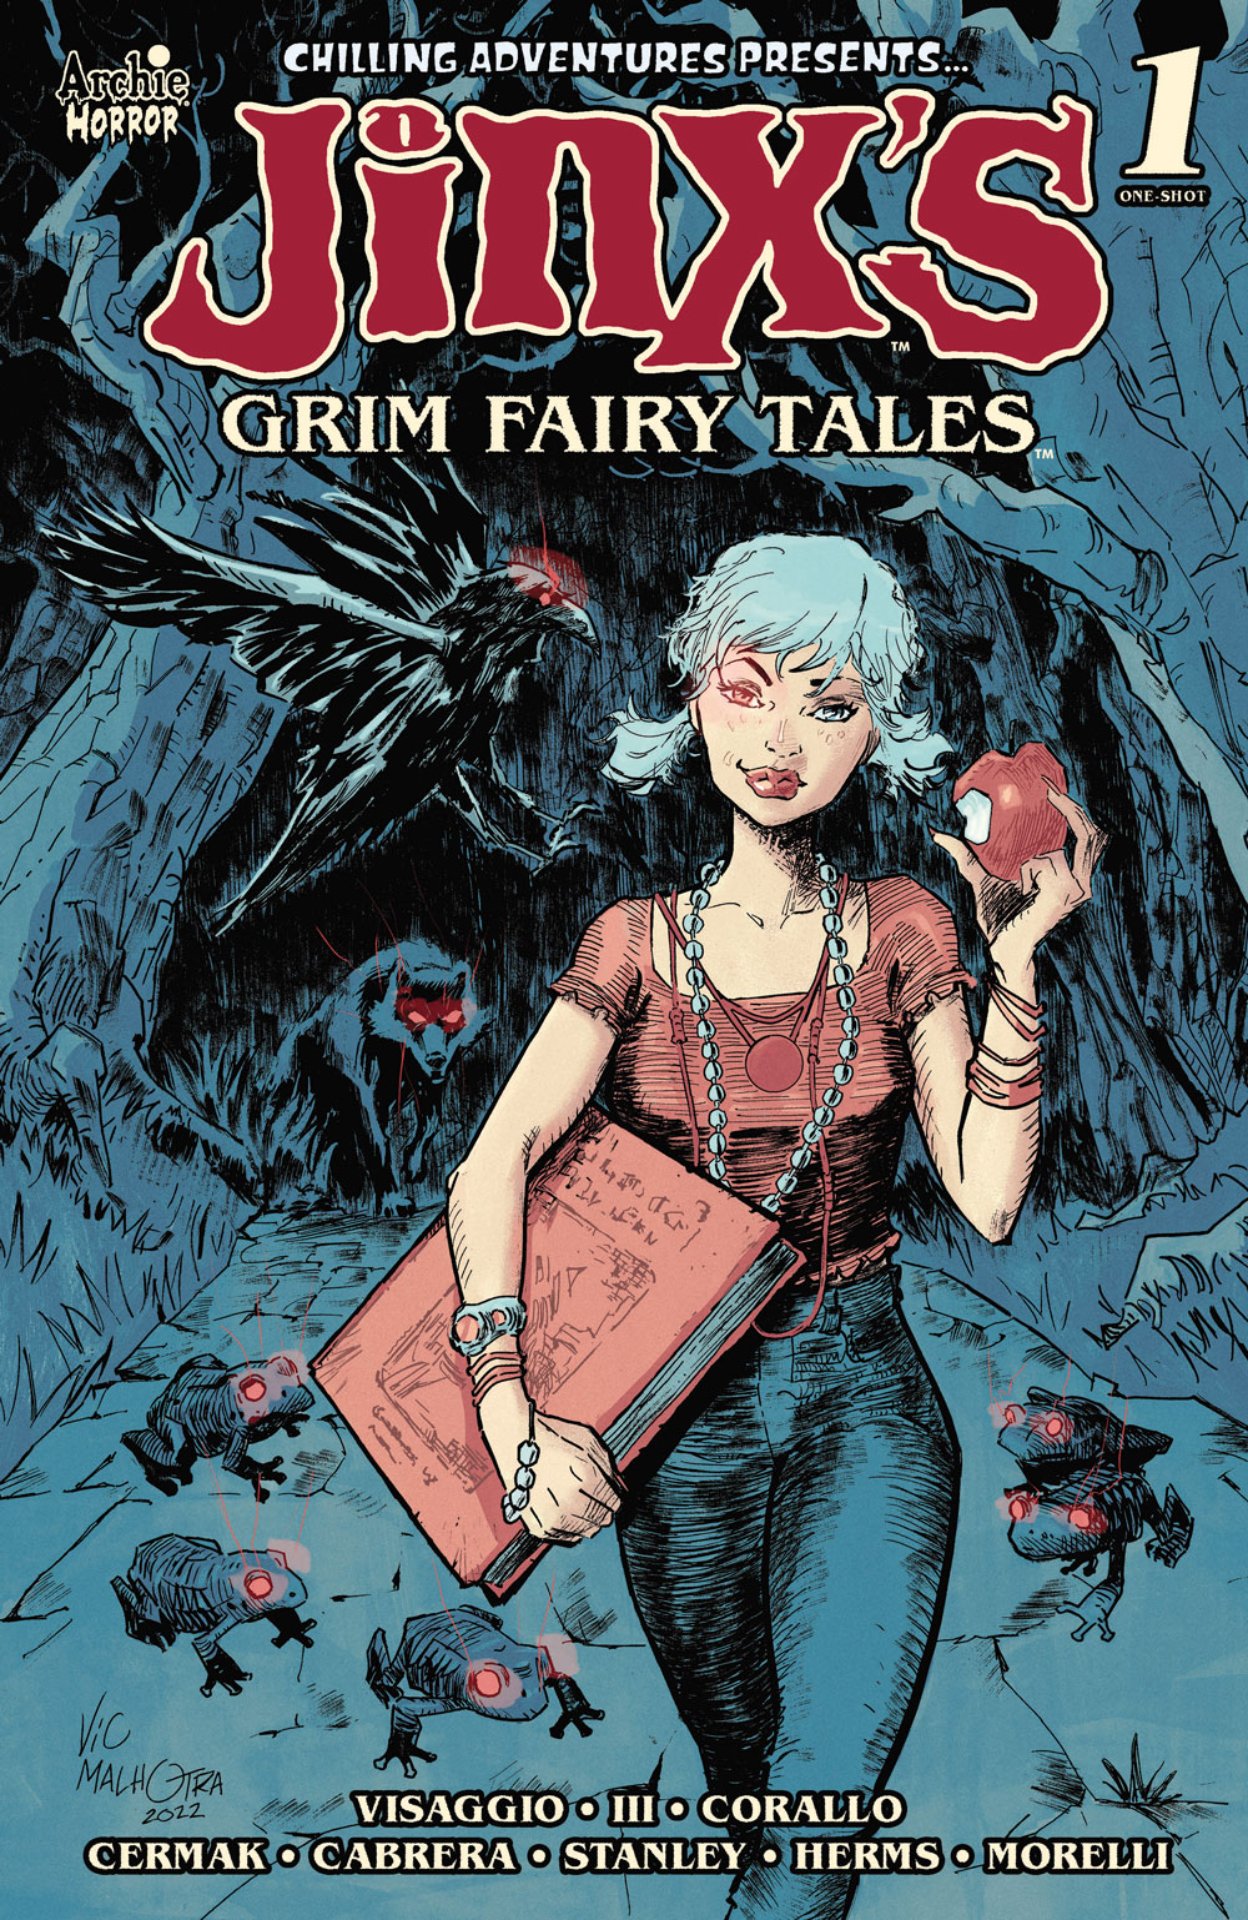 Chilling Adventures Presents... Jinx's Grim Fairy Tales #1